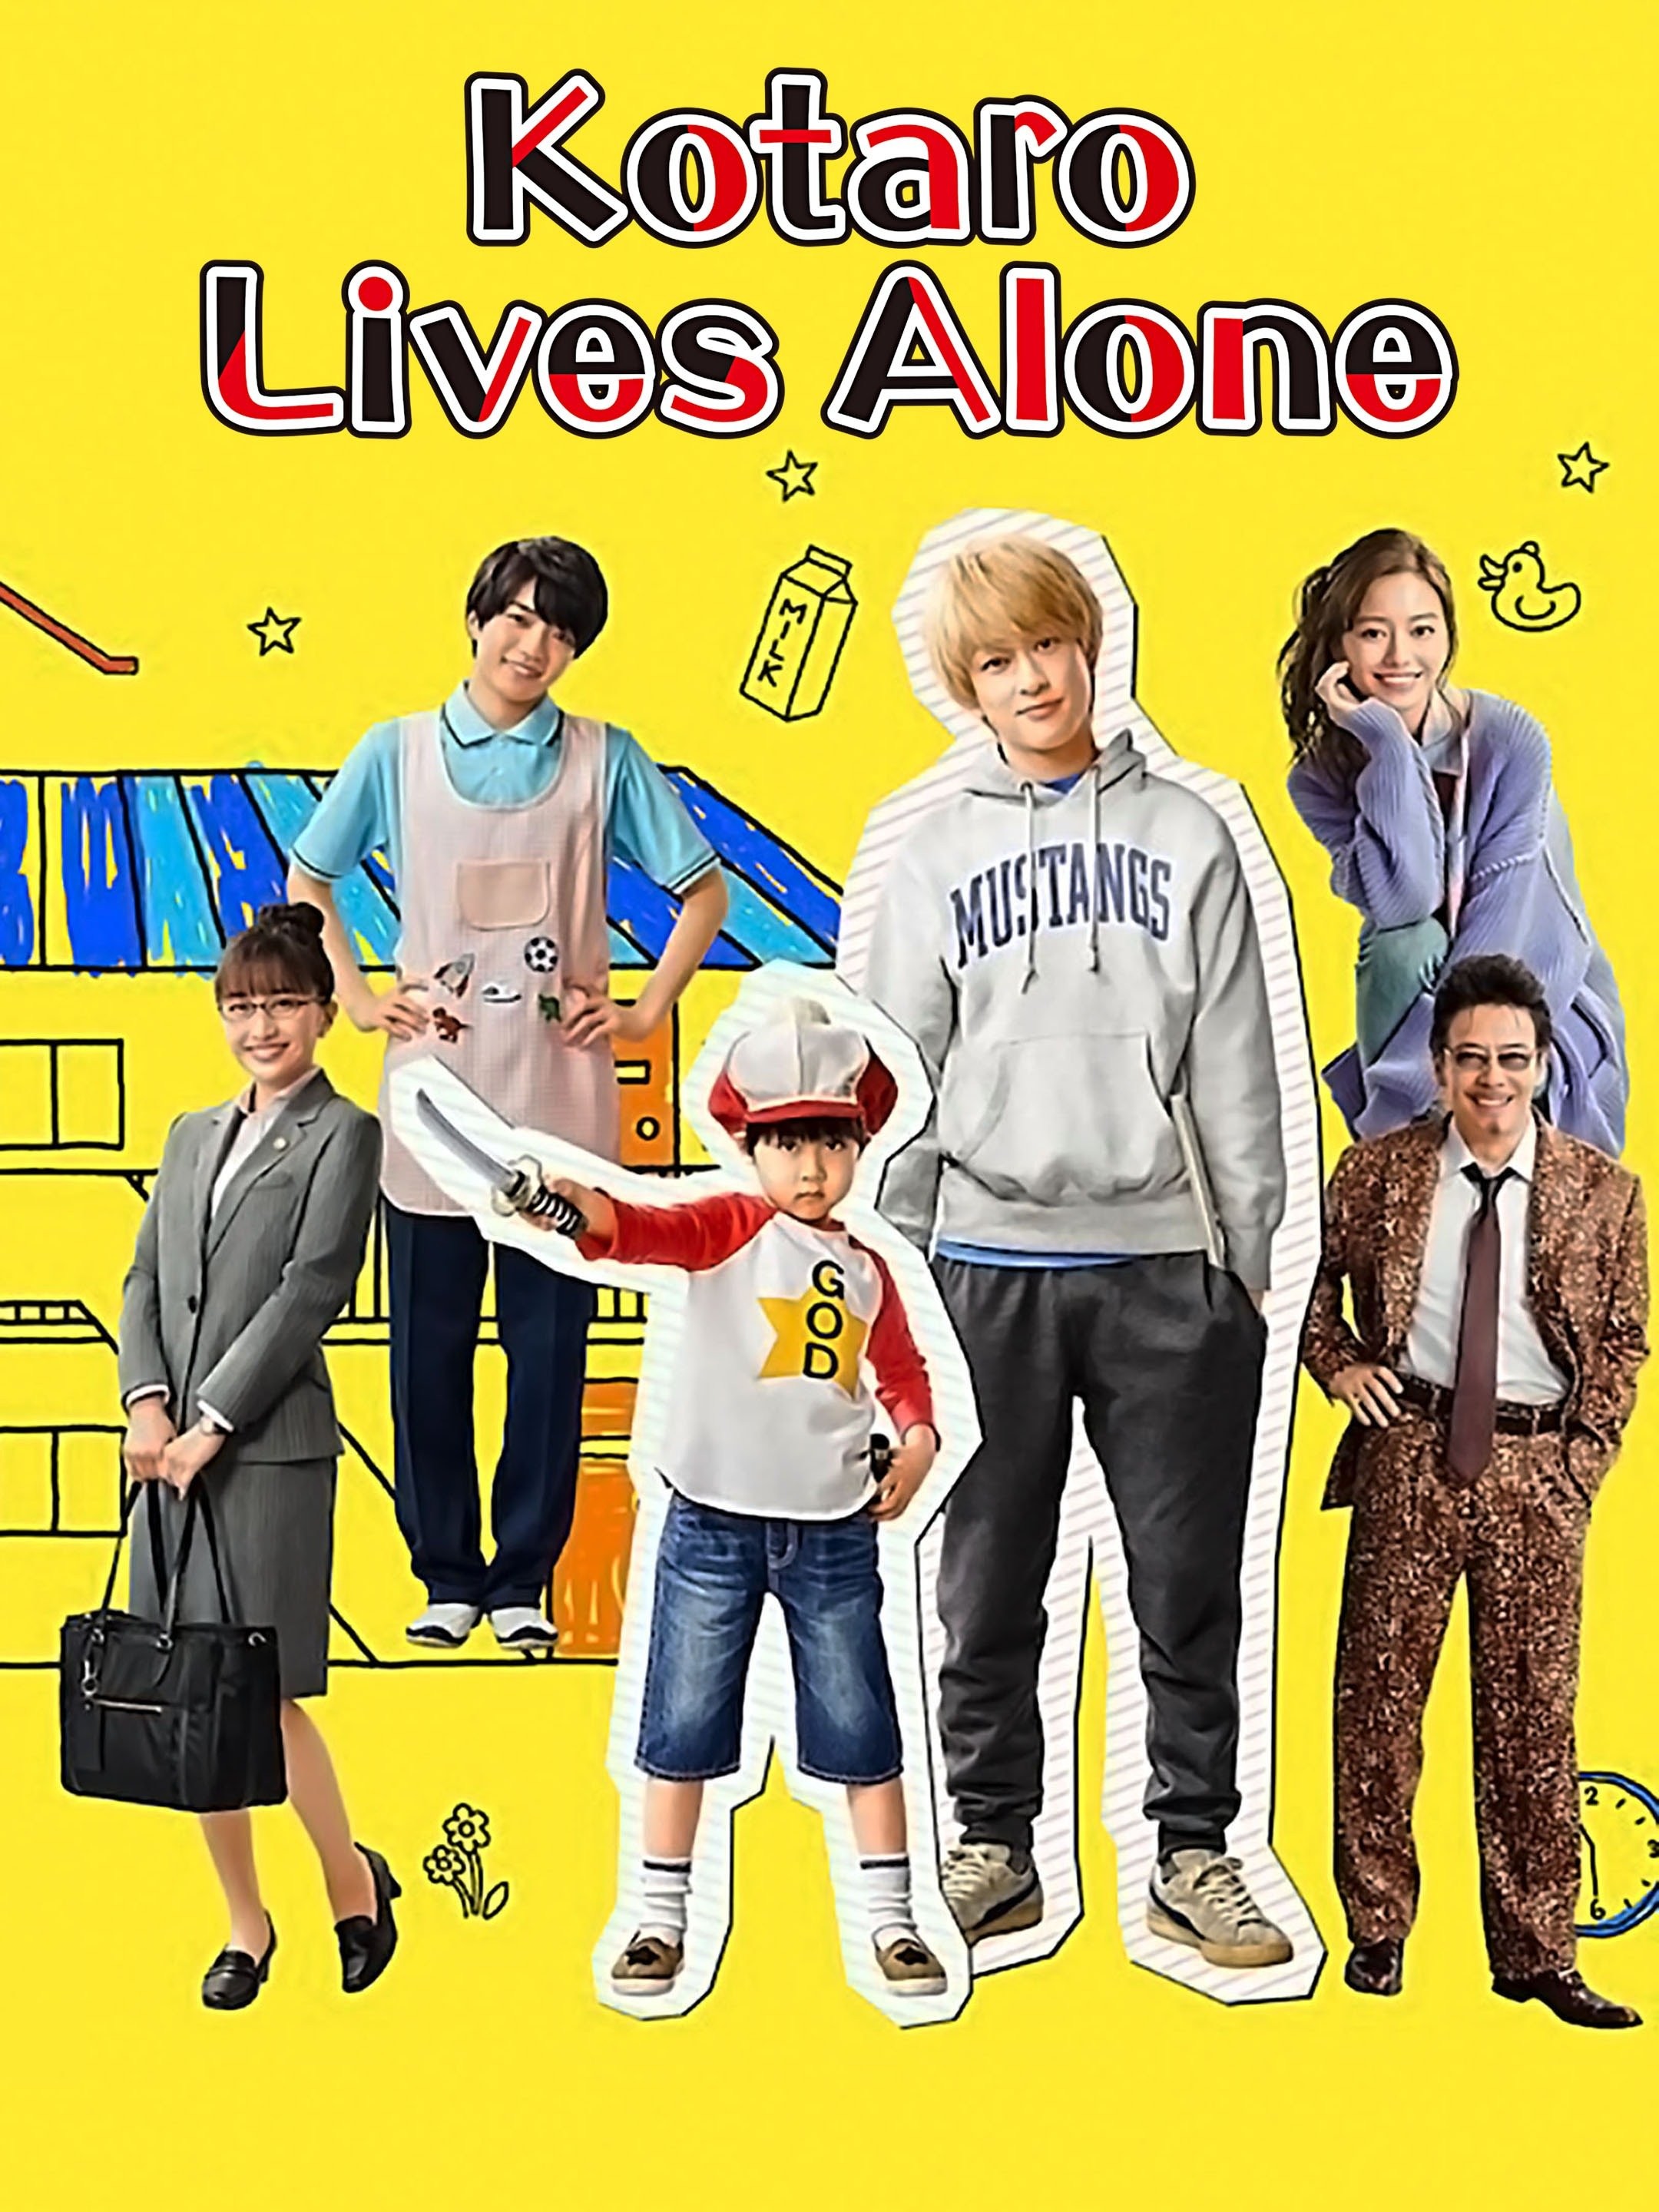 Kotaro Lives Alone, Official Trailer